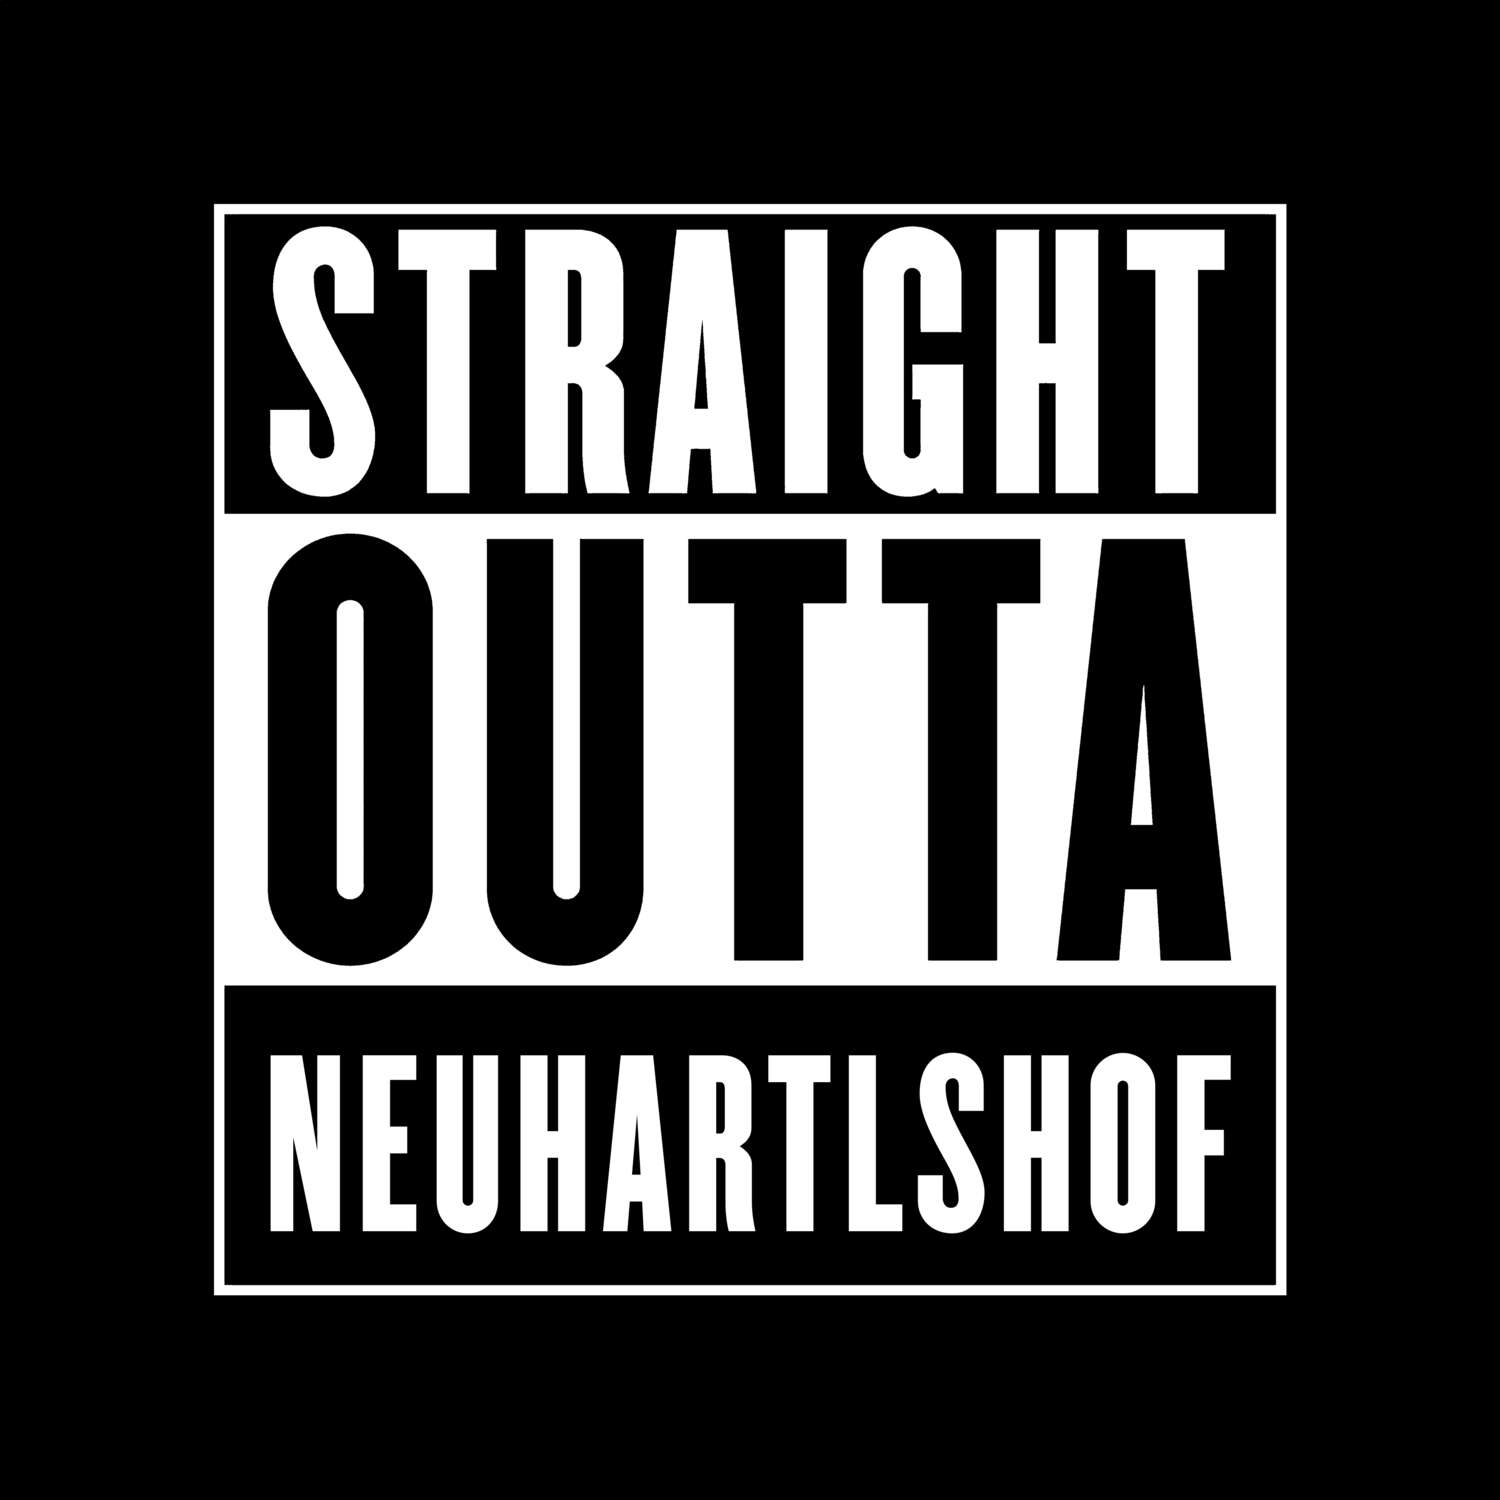 Neuhartlshof T-Shirt »Straight Outta«